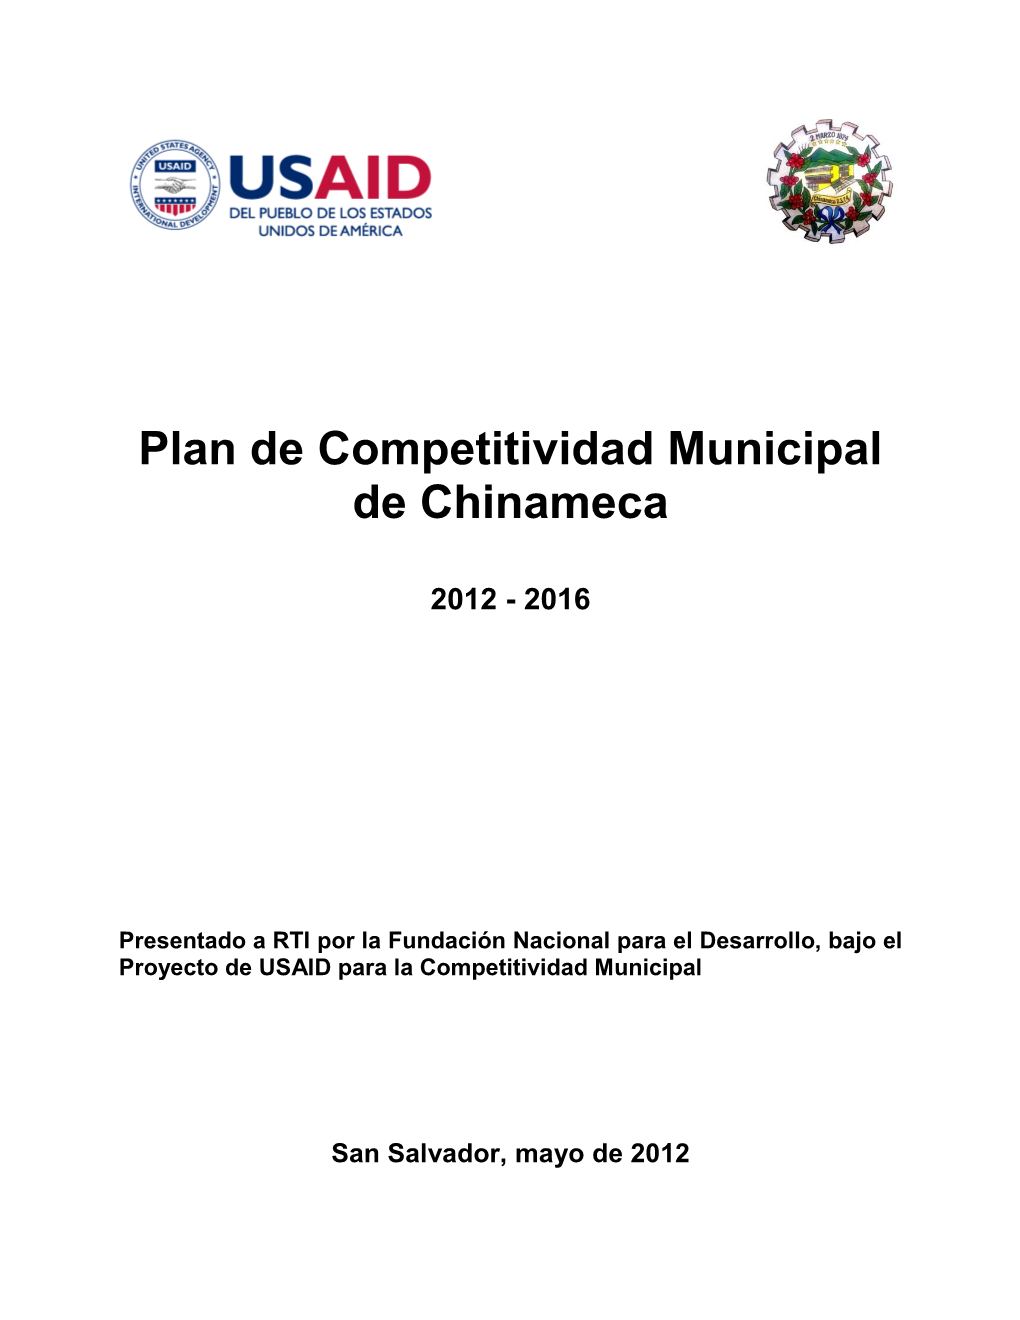 Proyecto USAID Para La Competitividad Municipal